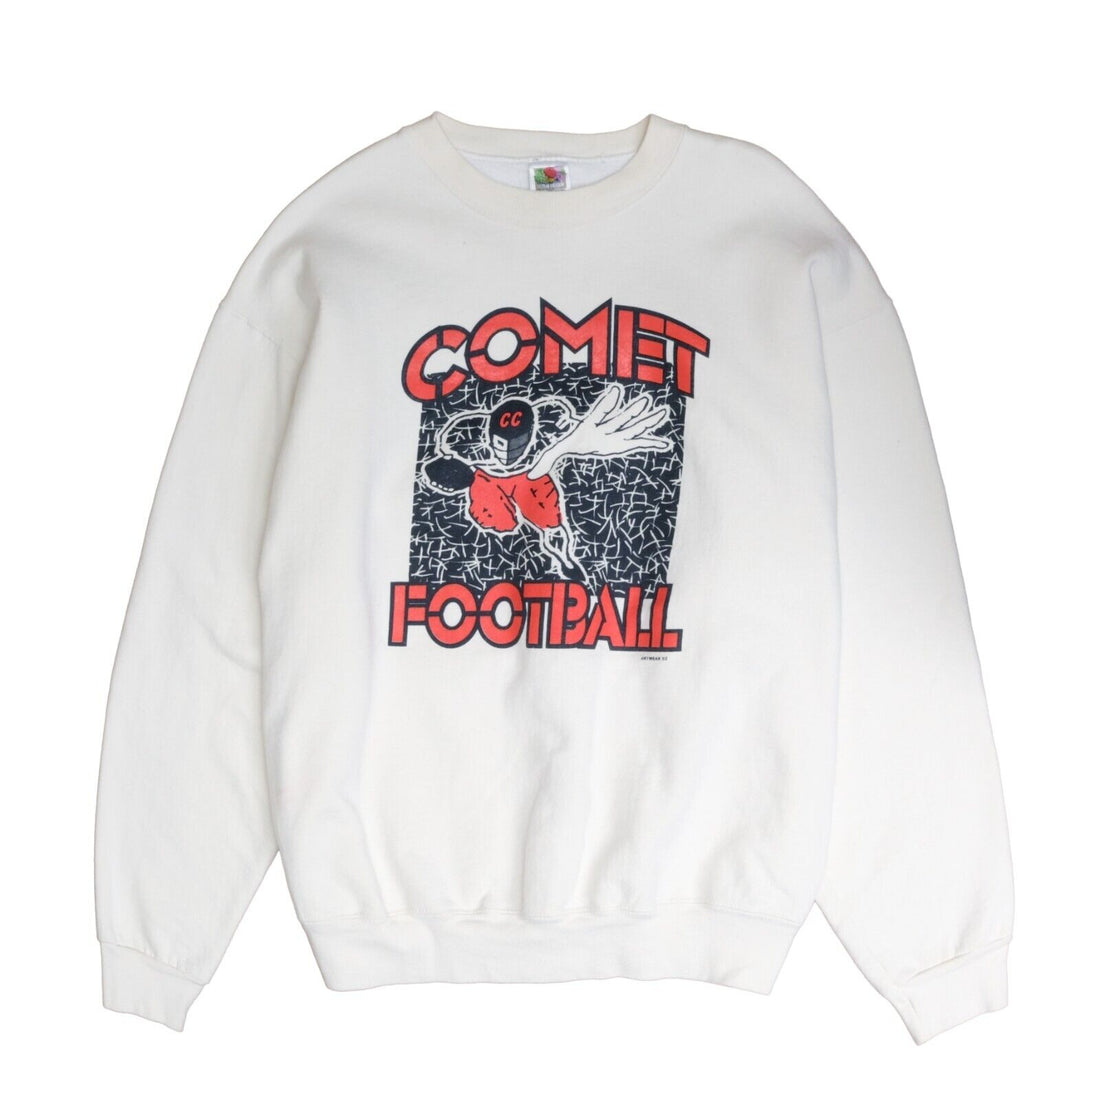 Vintage Comet Football Sweatshirt Crewneck Size XL Beige